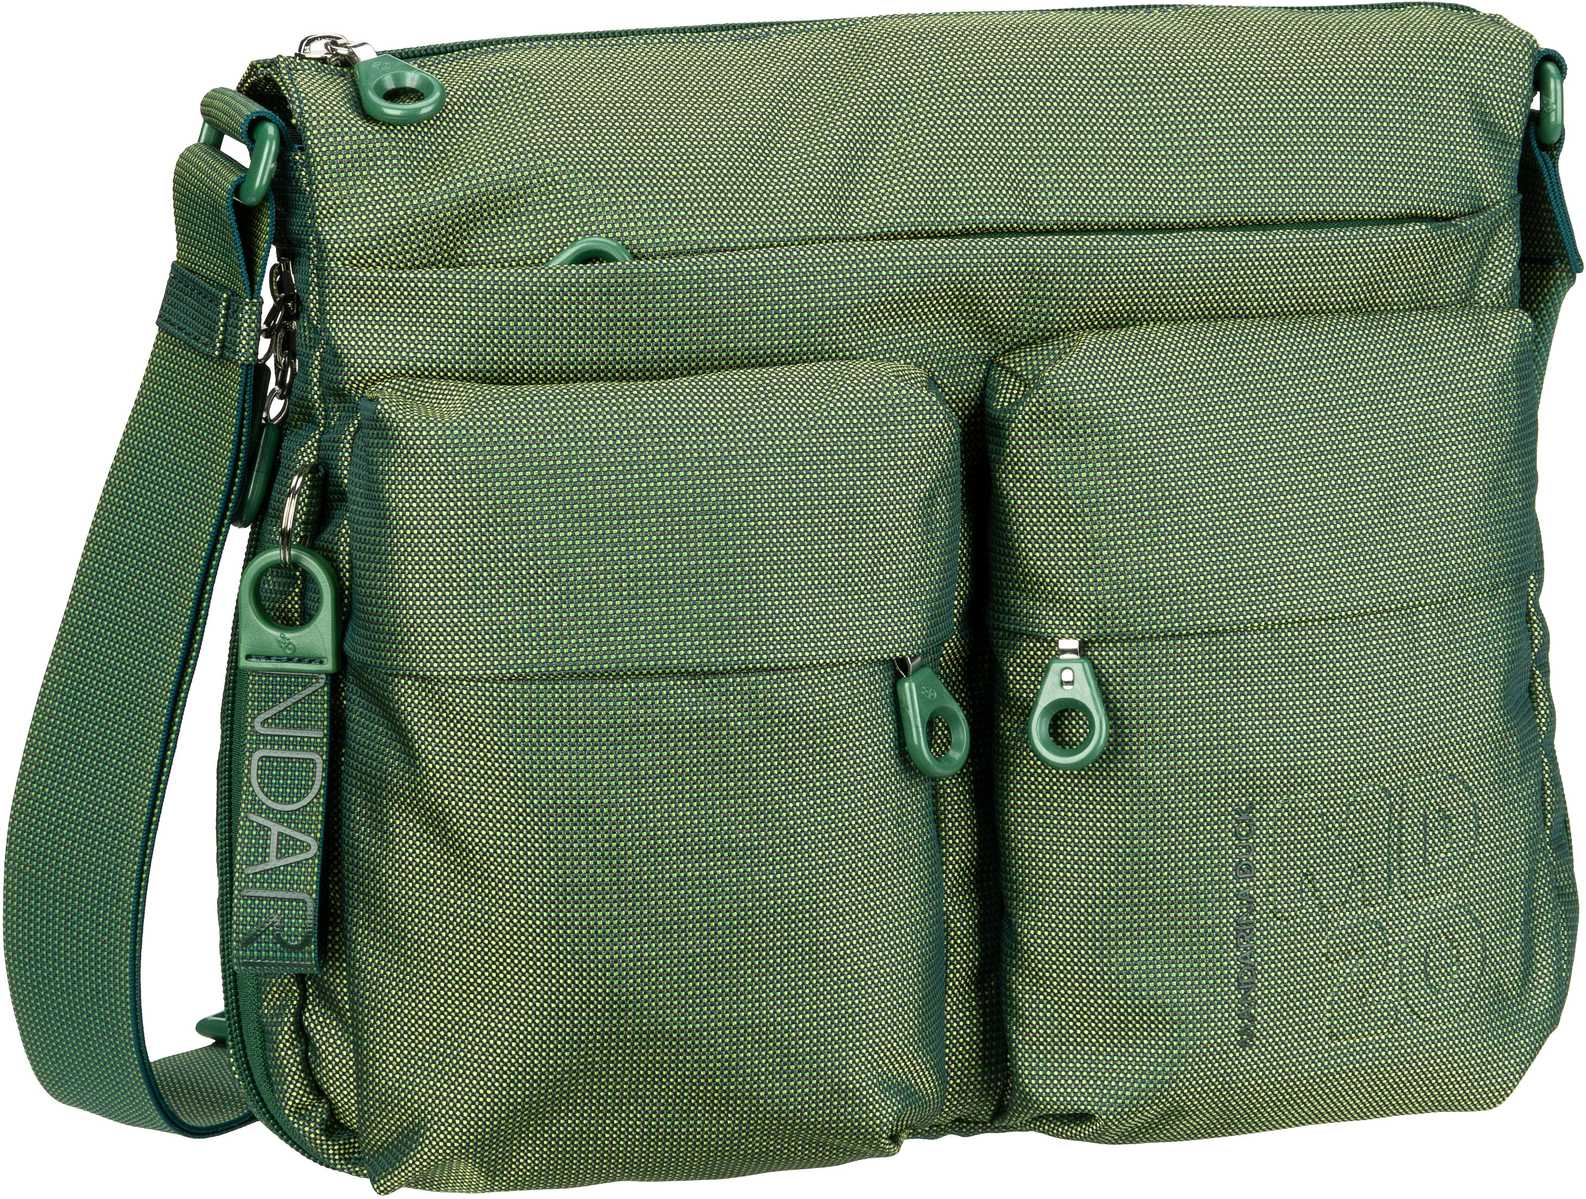 Mandarina Duck MD20 Big Crossover Bag QMTX6 - Foliage Green